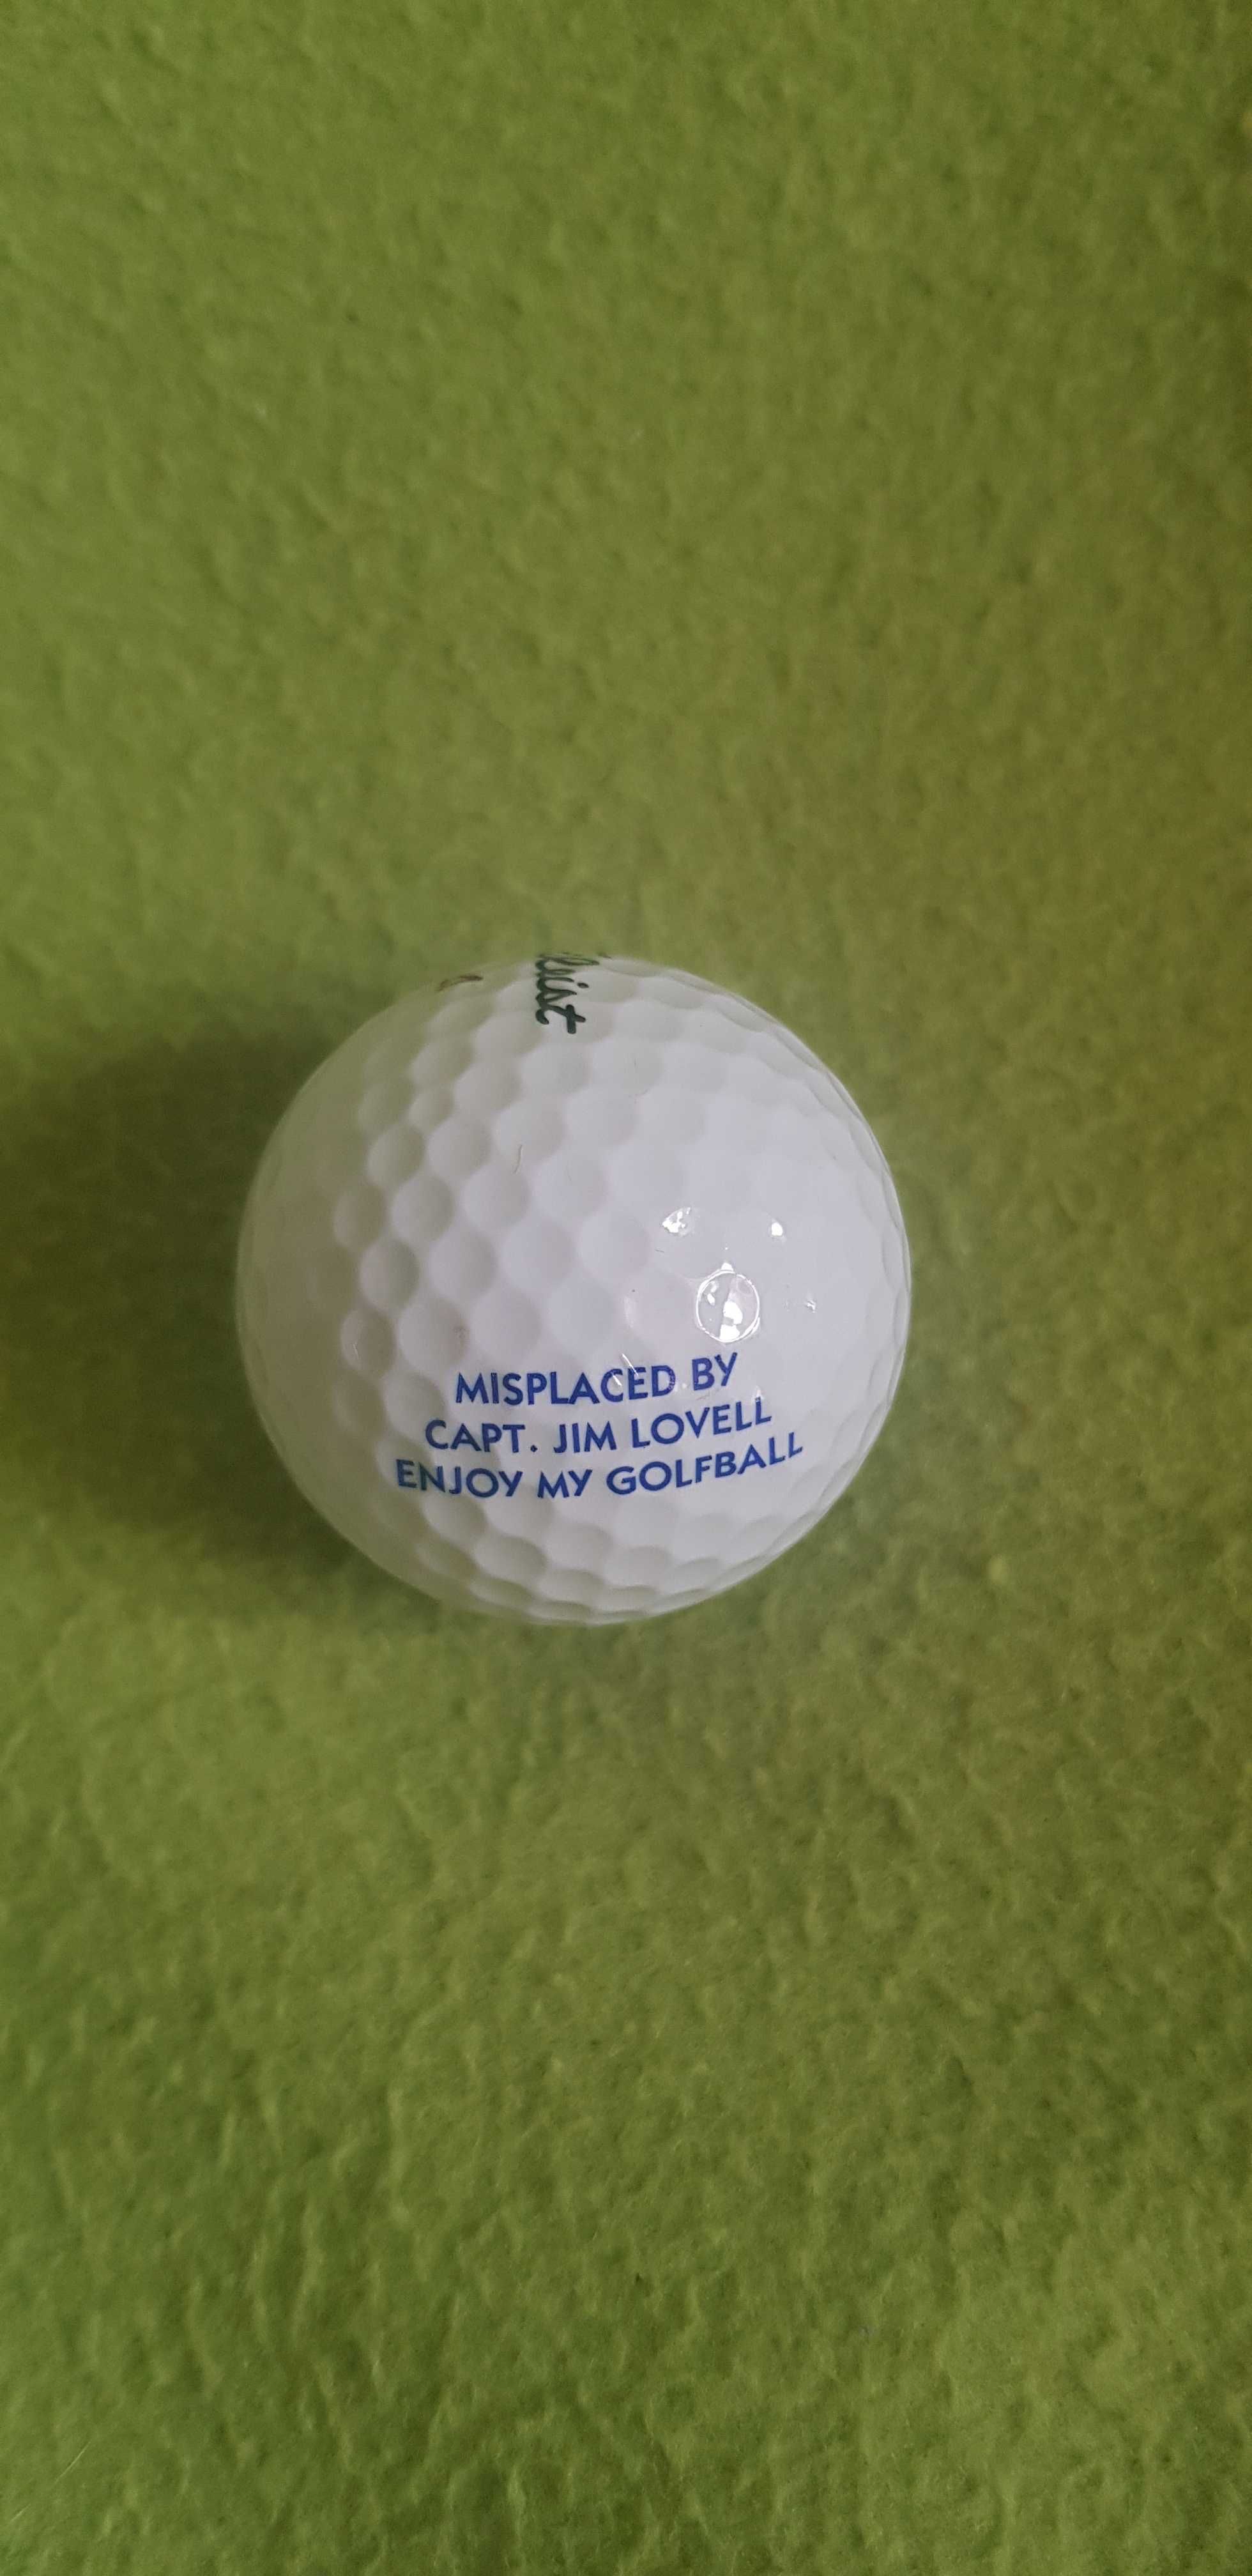 Apollo XIII lovell piłki do golfa